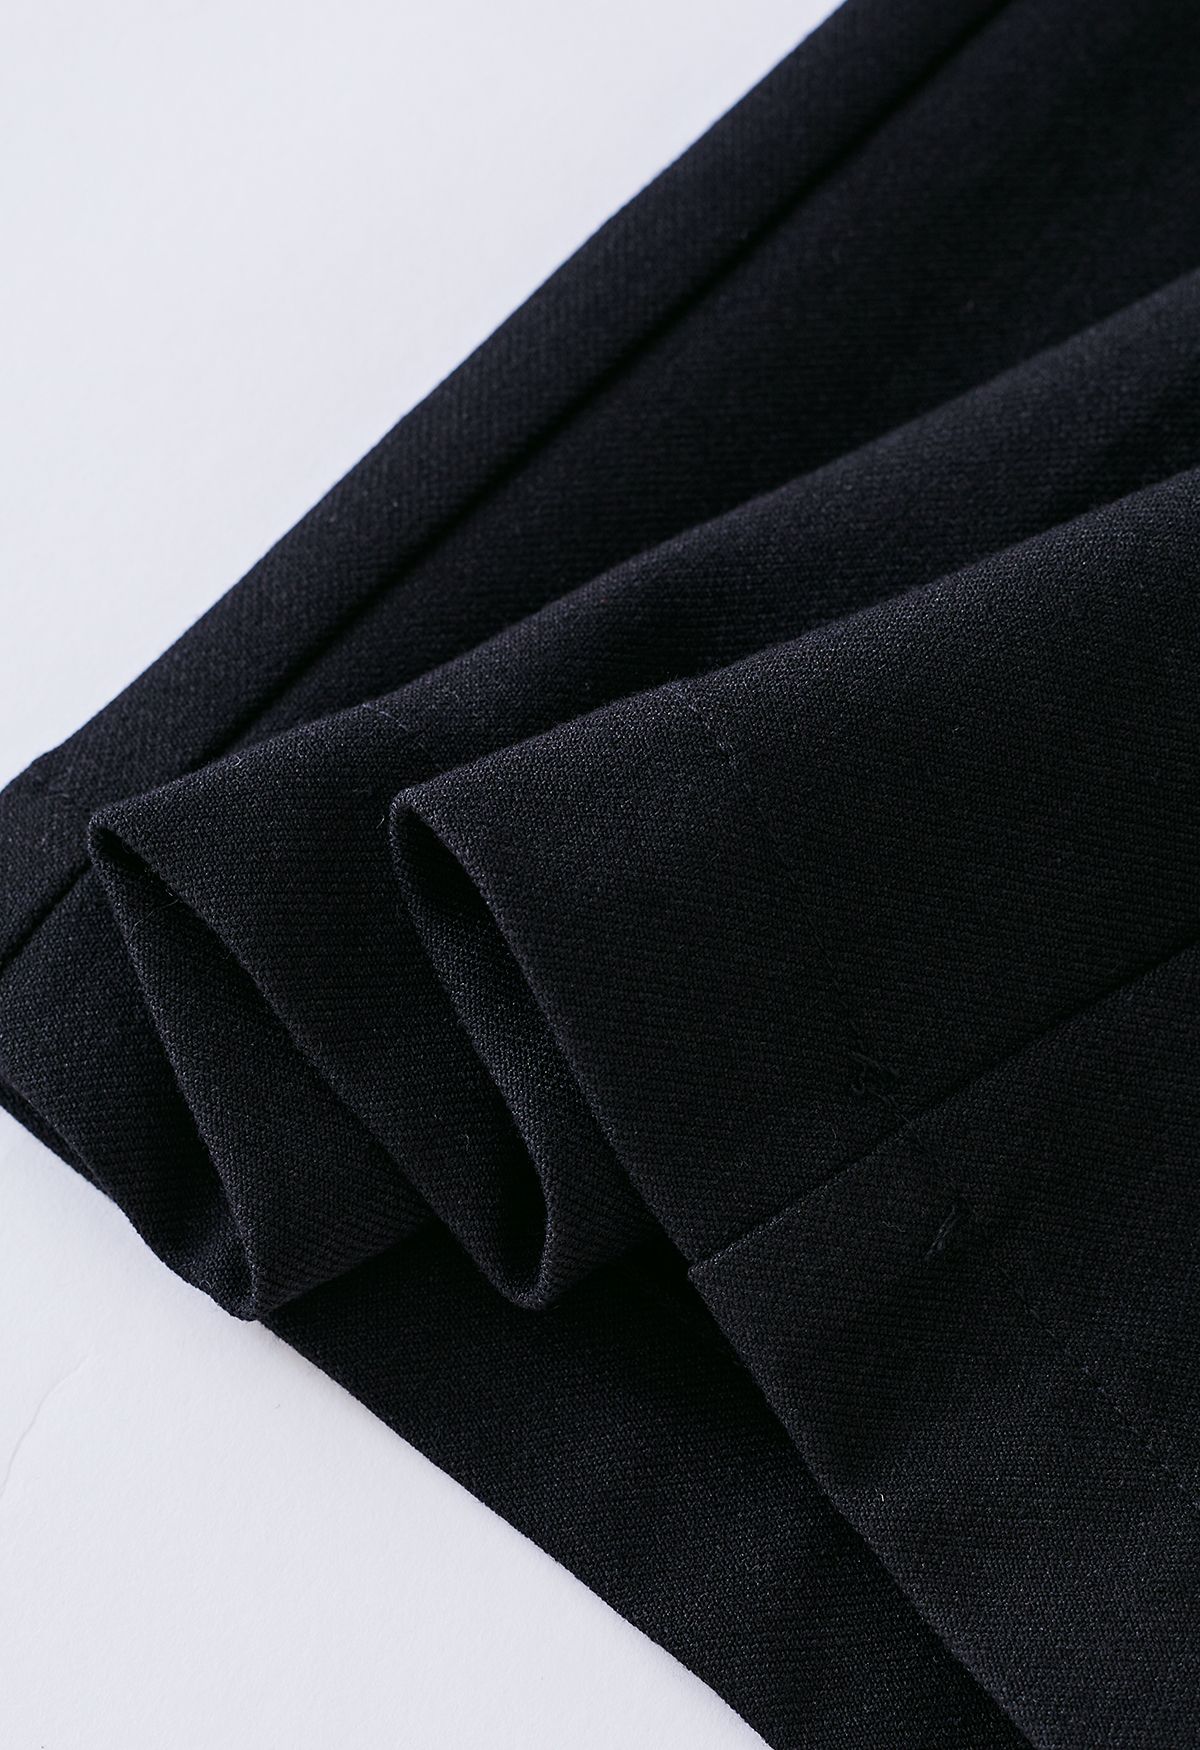 Tie Waist Wide-Leg Pants in Black